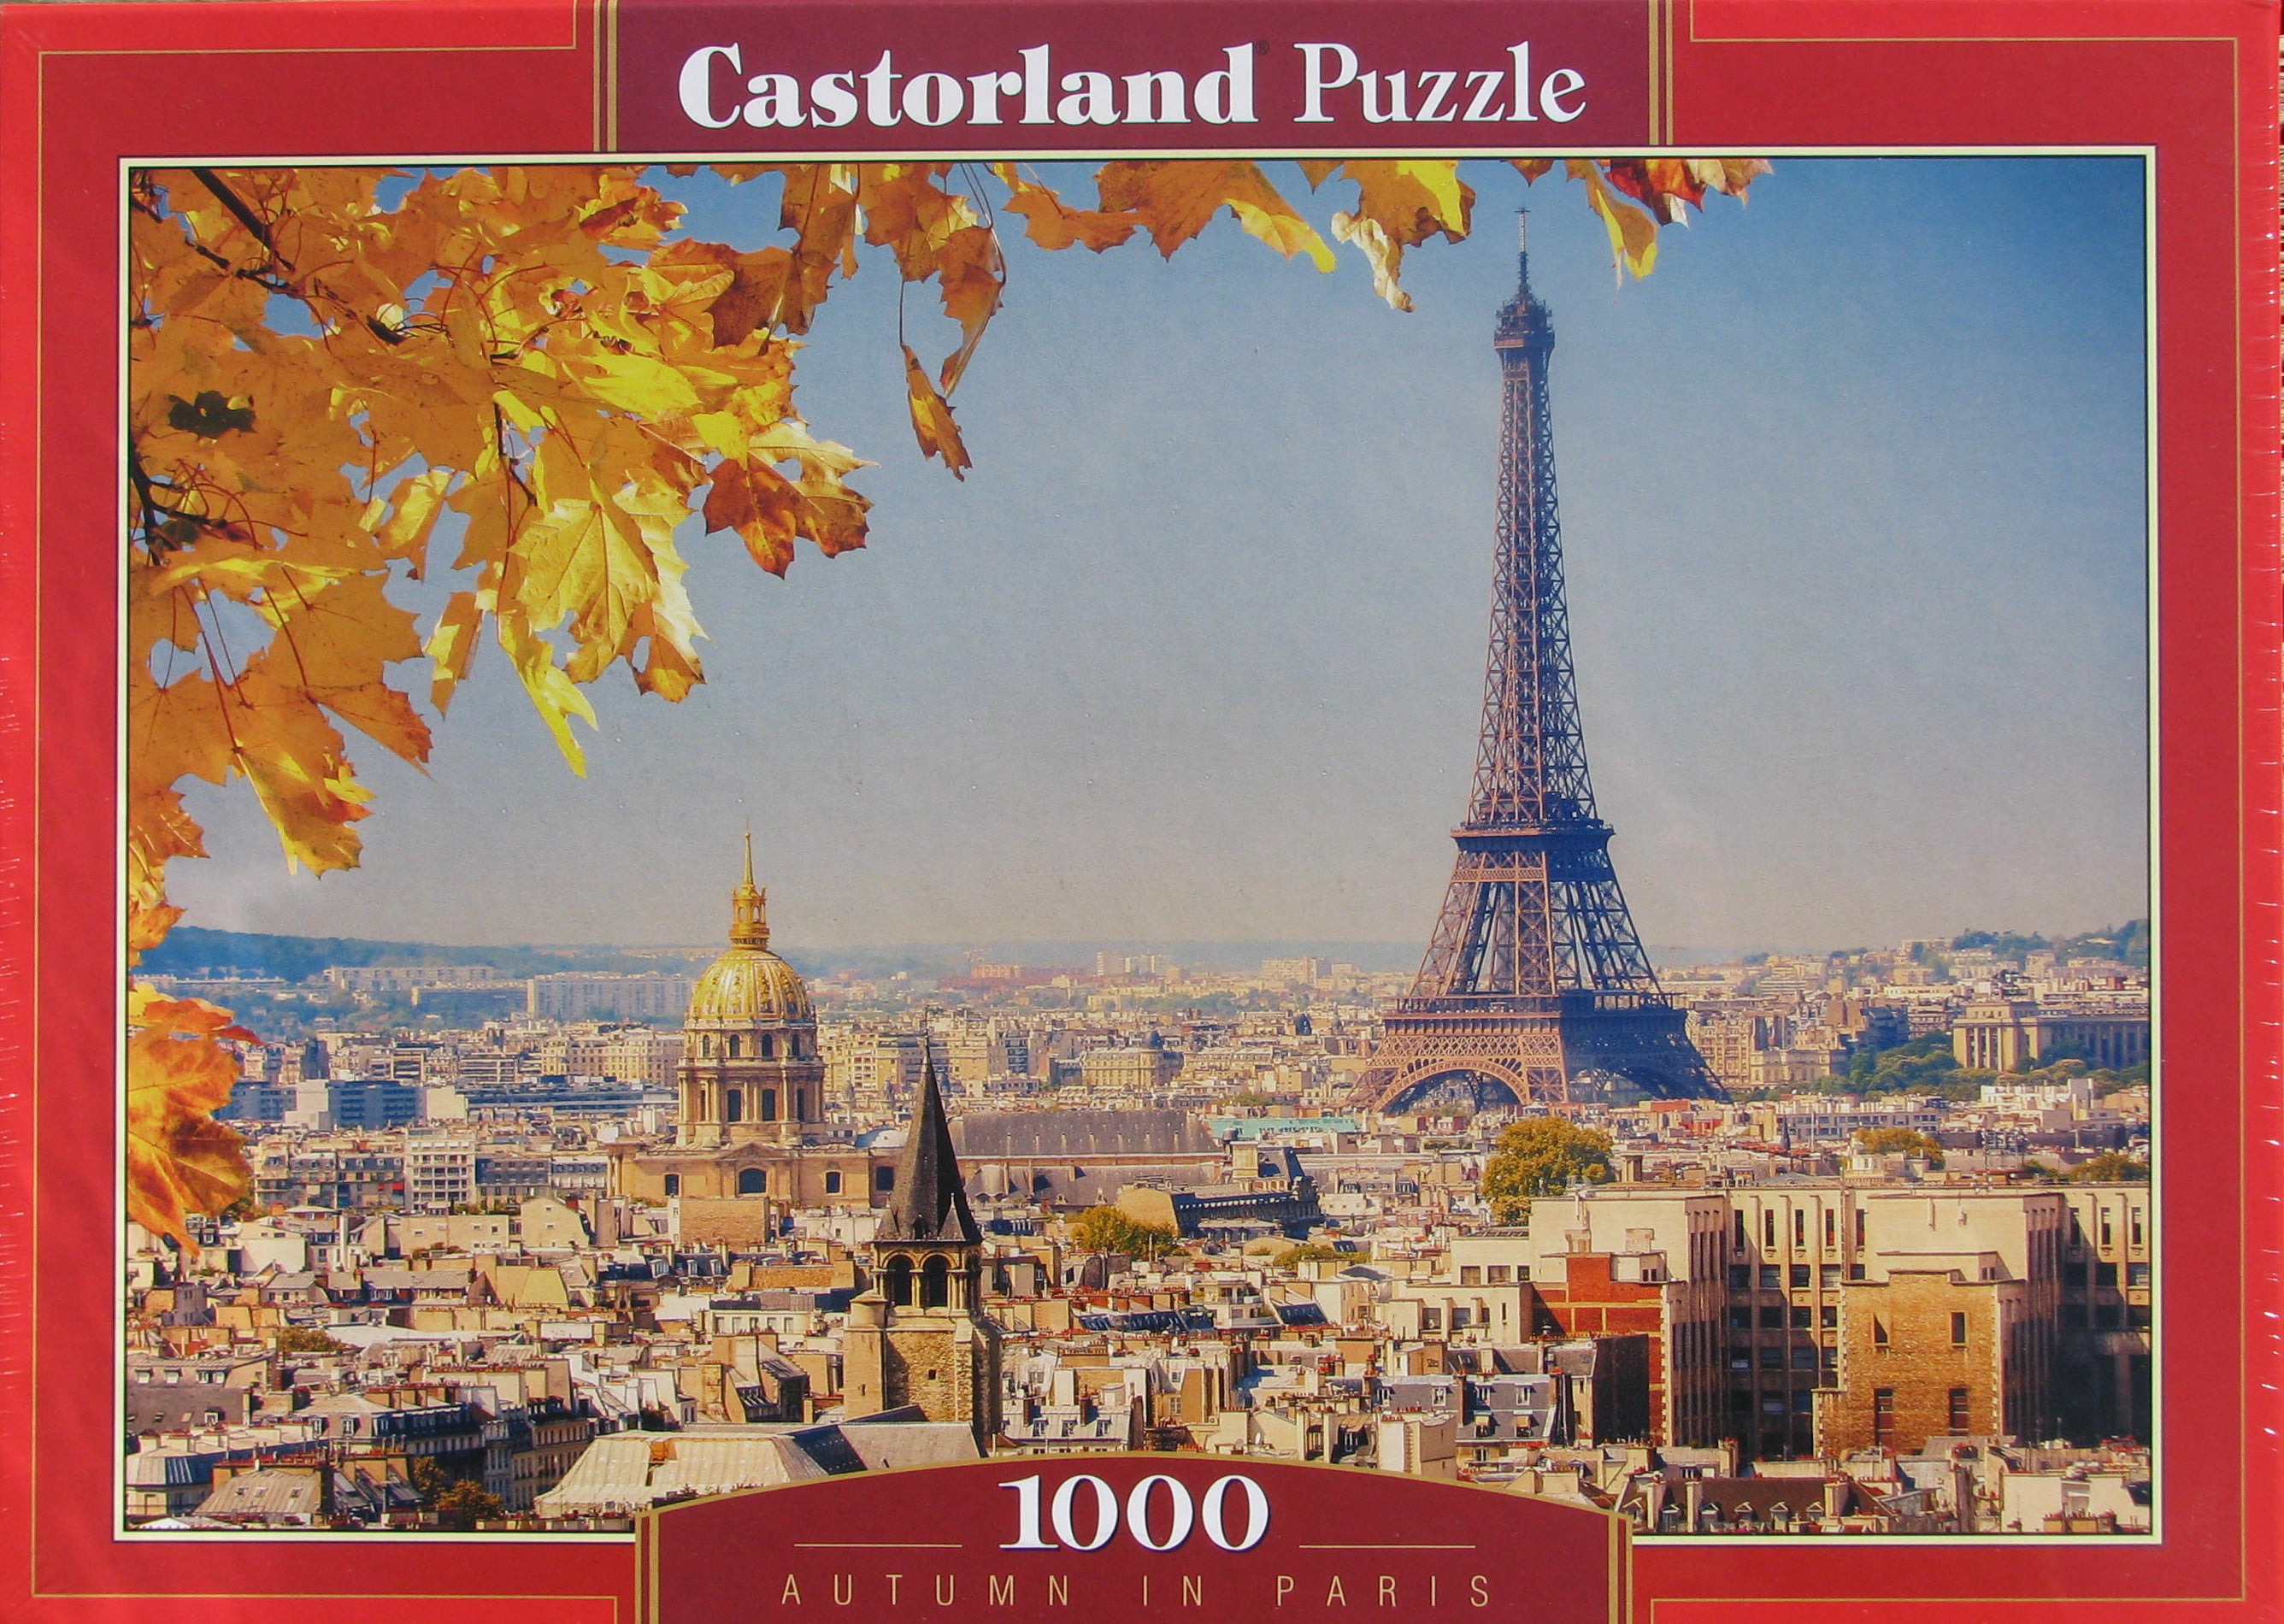 CASTORLAND 1000 Piece Jigsaw Puzzle, Walk in Paris at Sunset, France